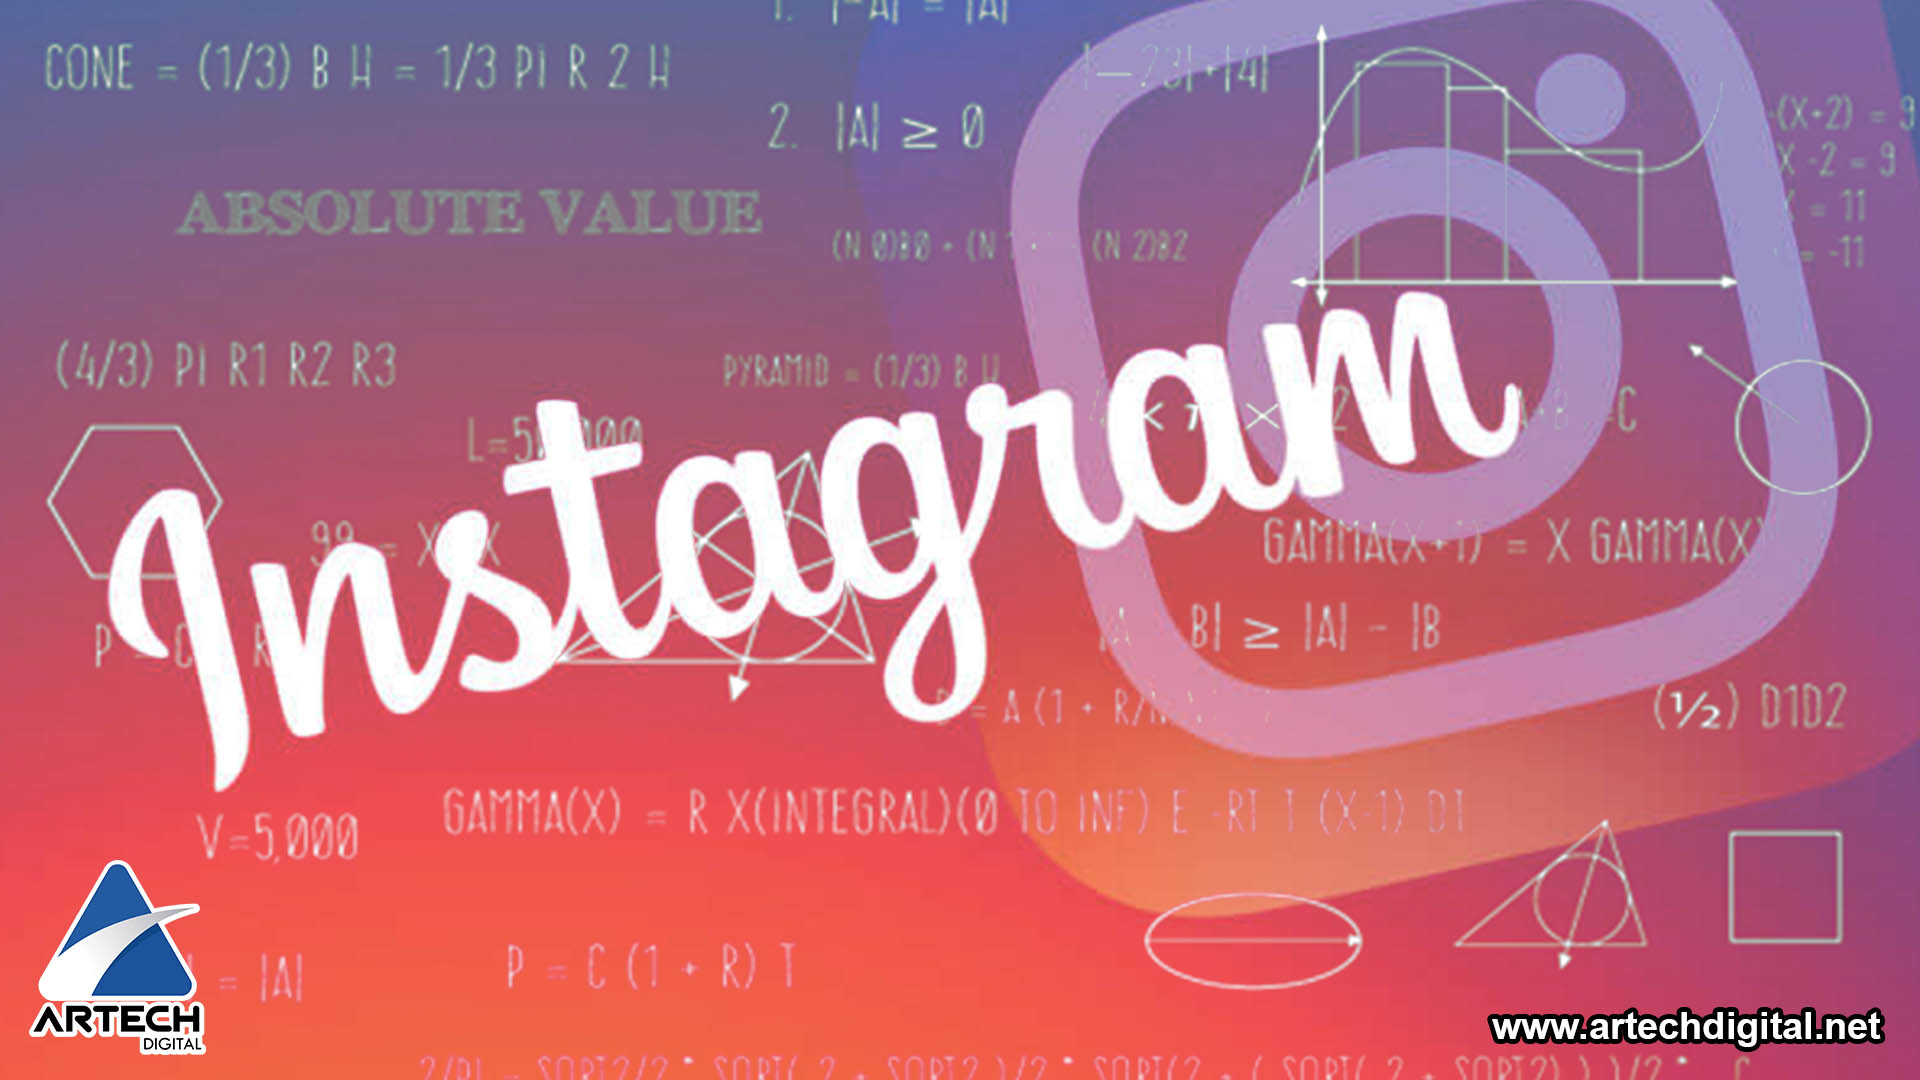 Instagram updates its algorithm - Artech Digital